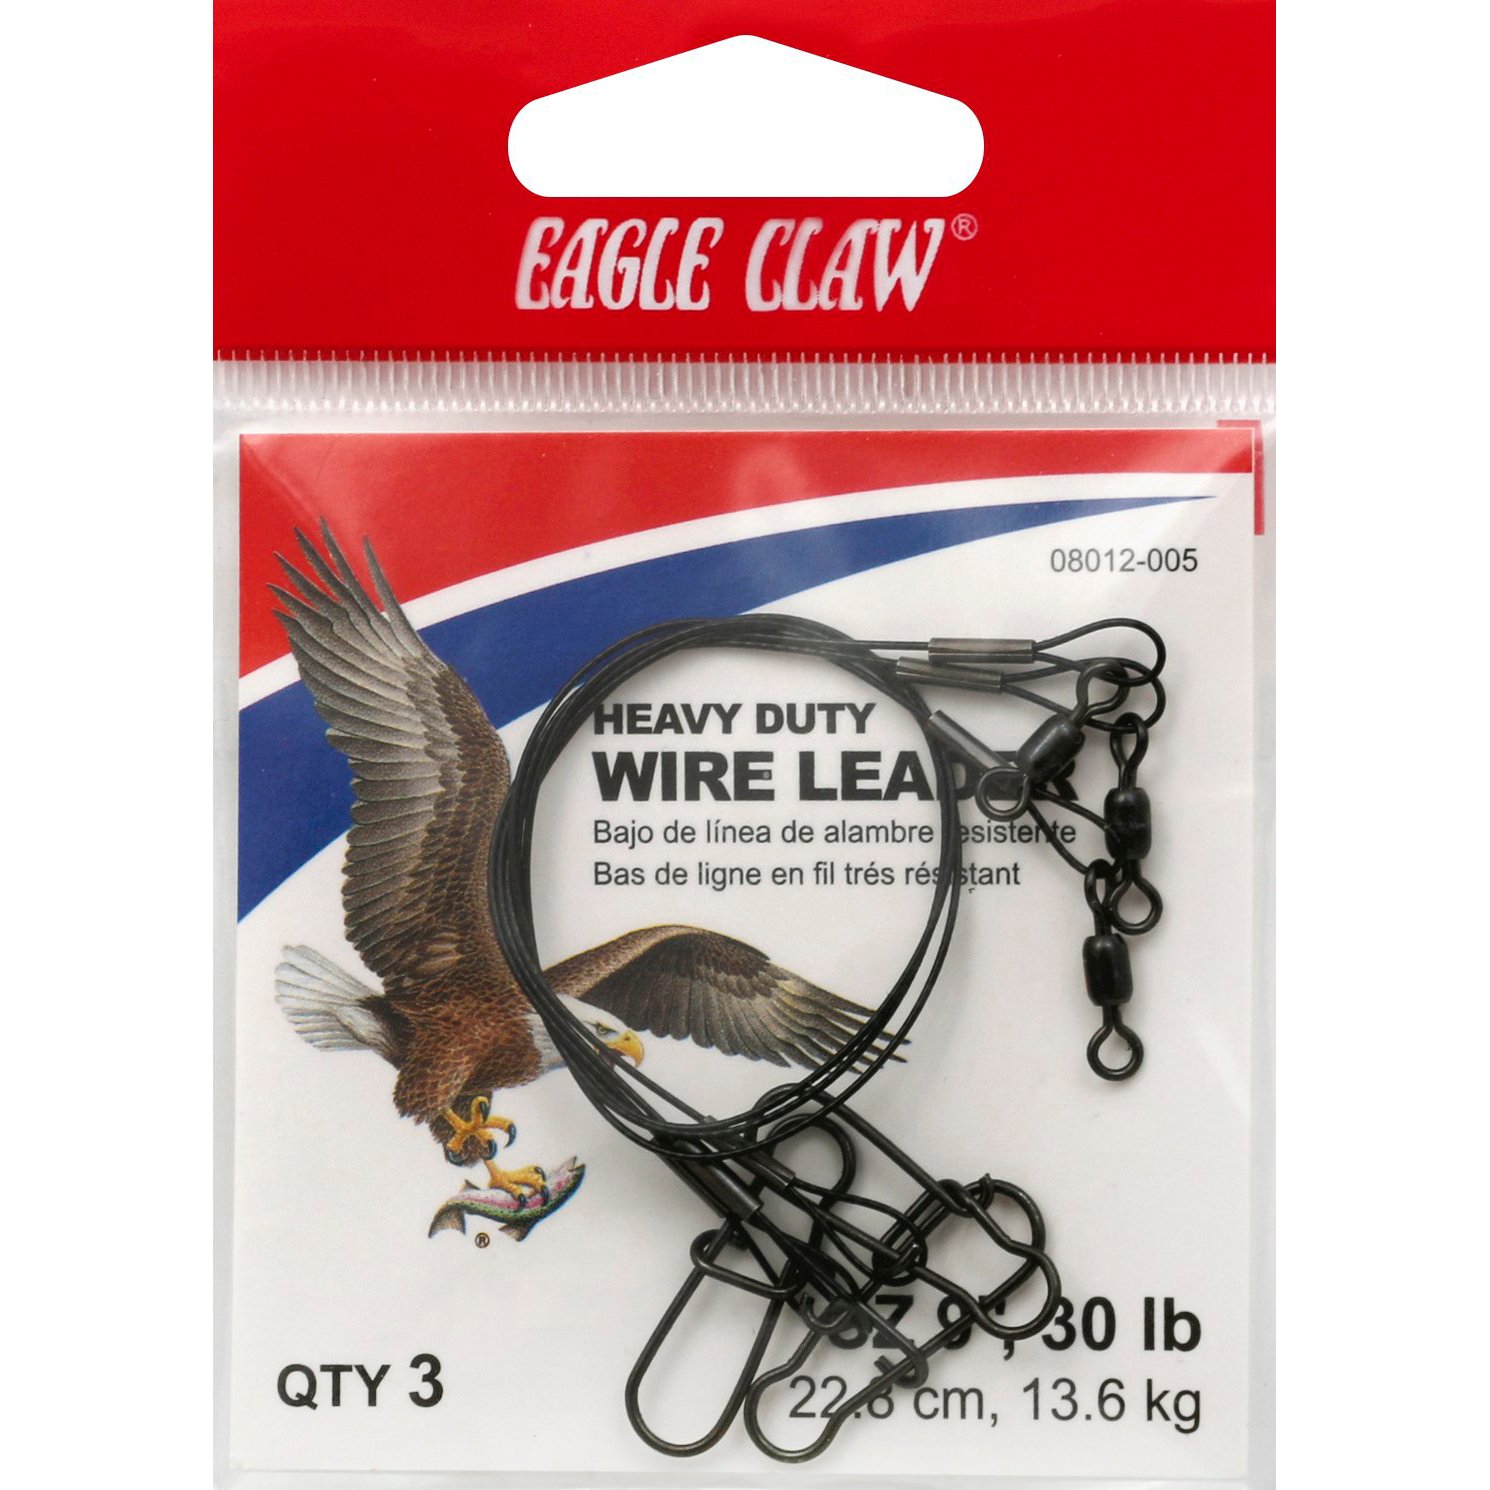 Eagle Claw Heavy Duty Wire Leader 24, 45 lb - Shop Fishing at H-E-B